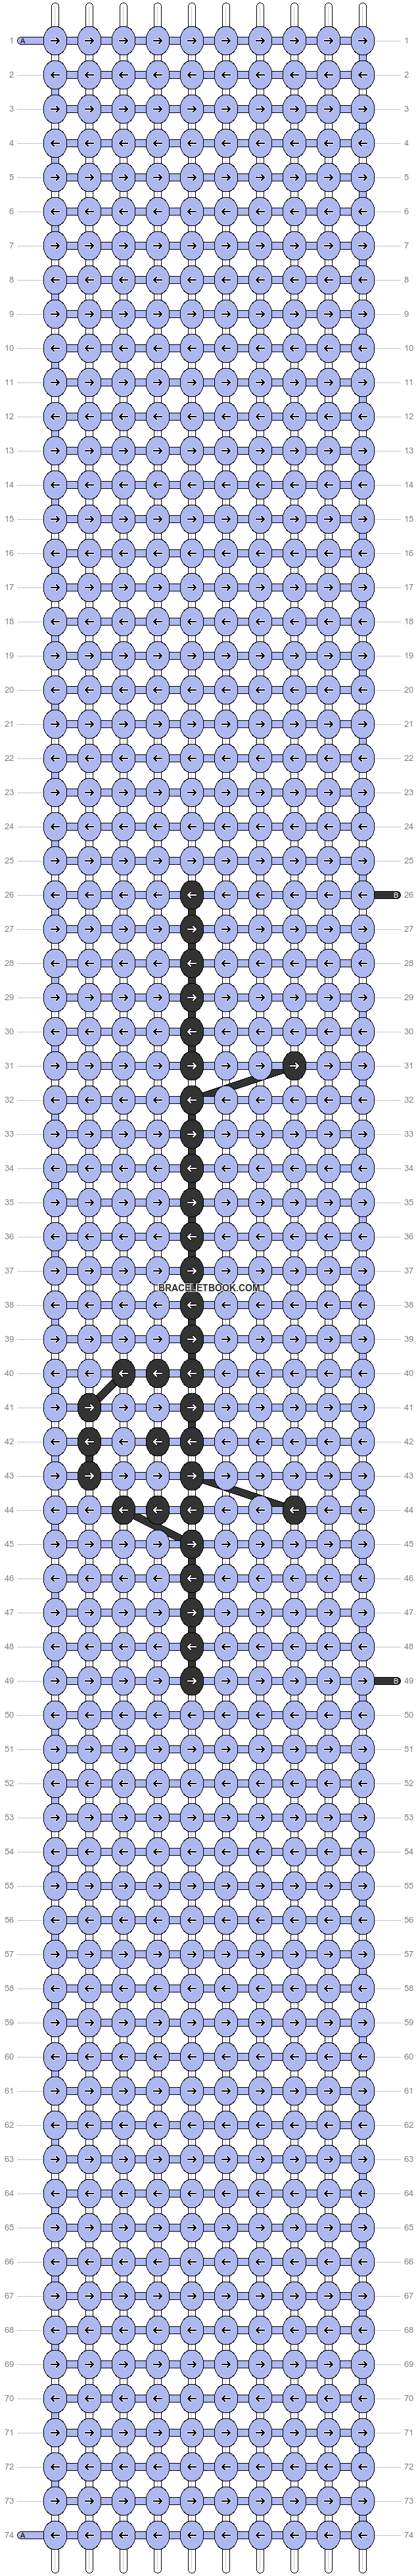 Alpha pattern #49305 variation #79116 pattern